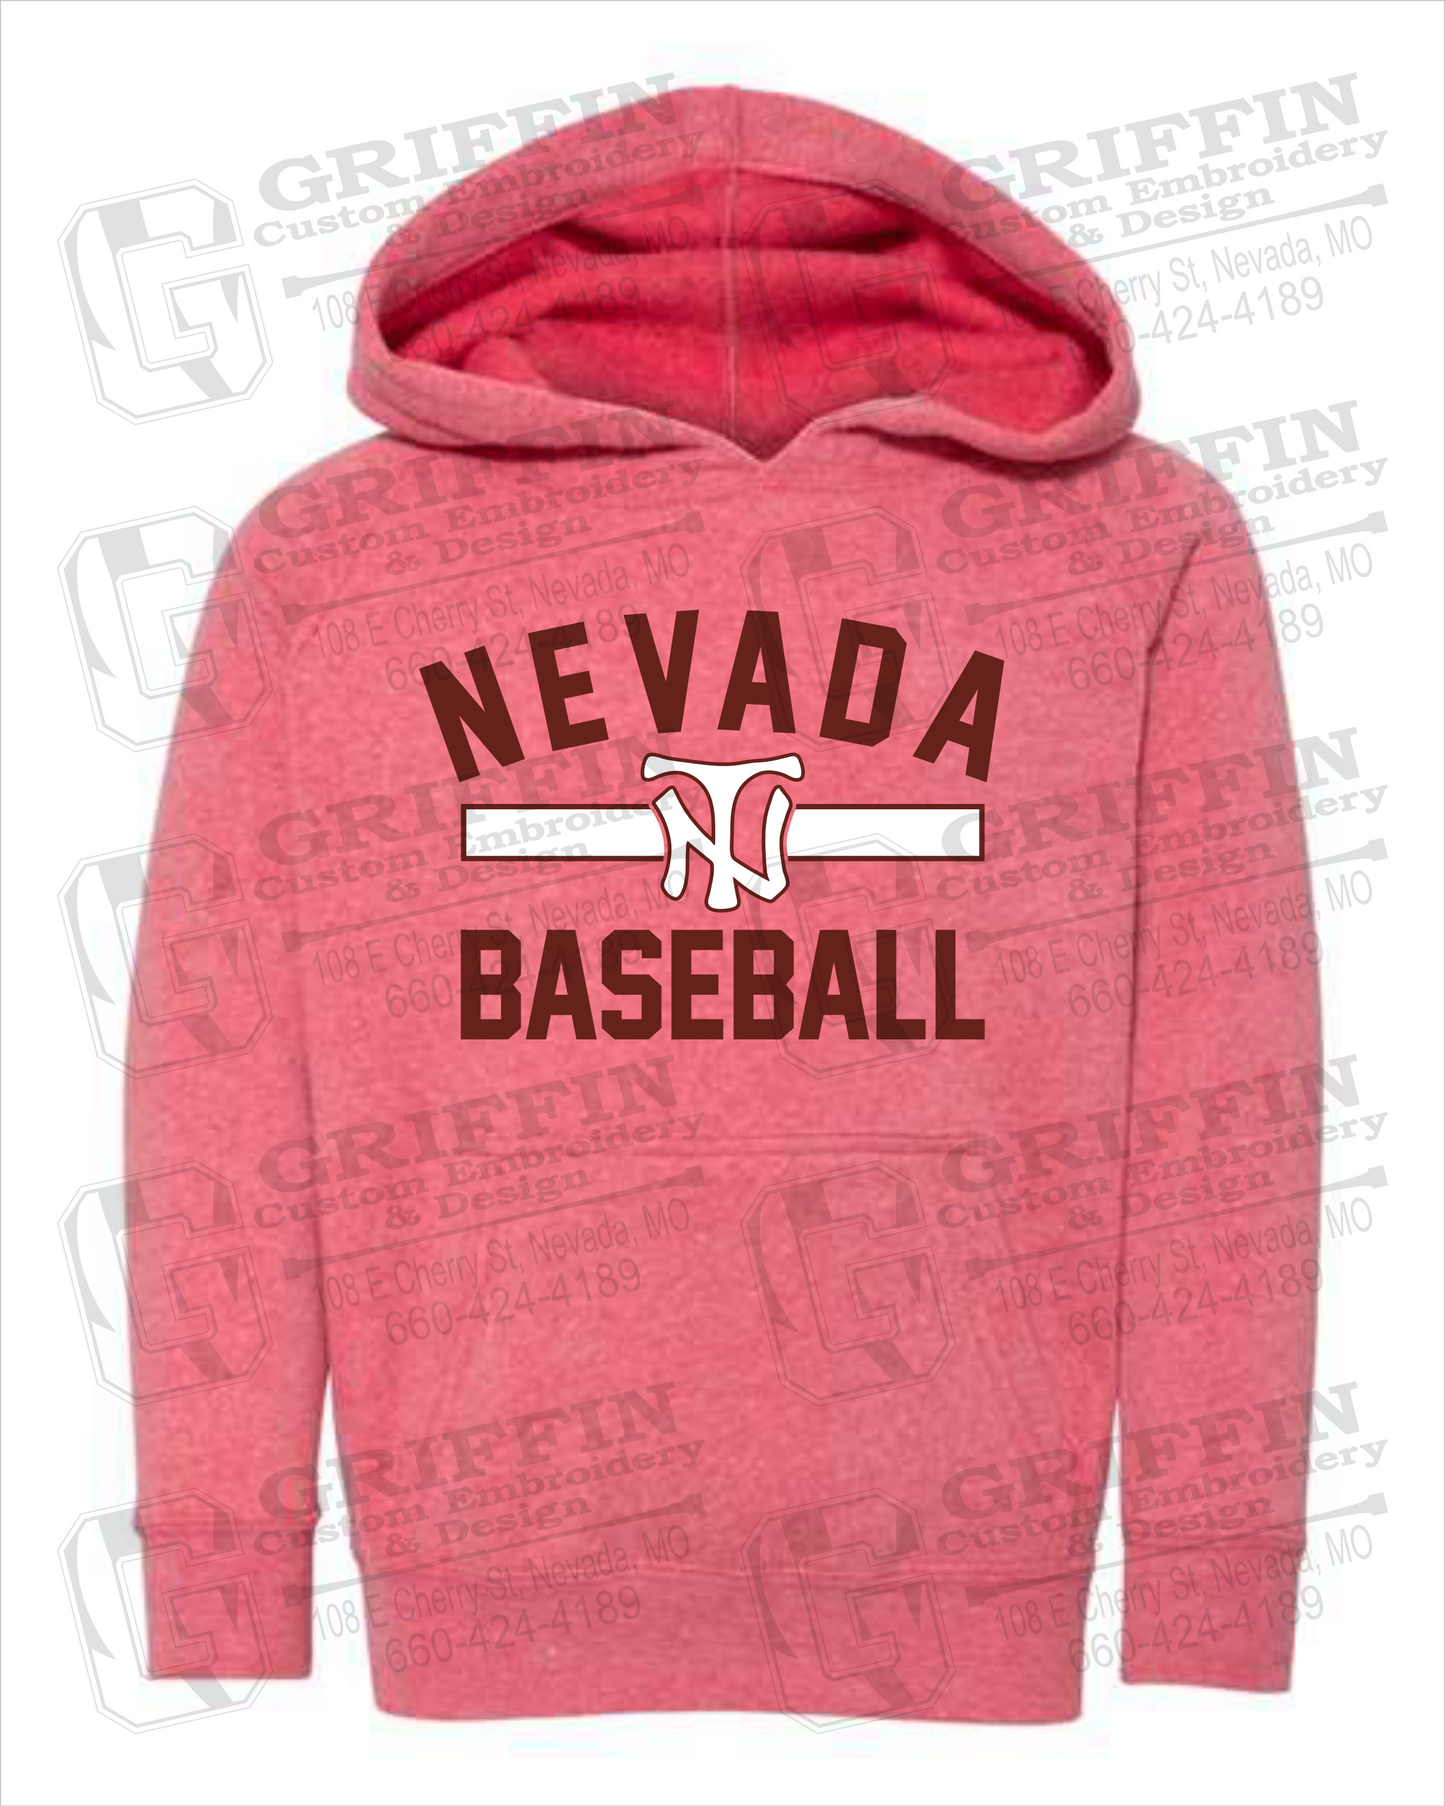 Nevada Tigers 24-Z Toddler Hoodie - Baseball